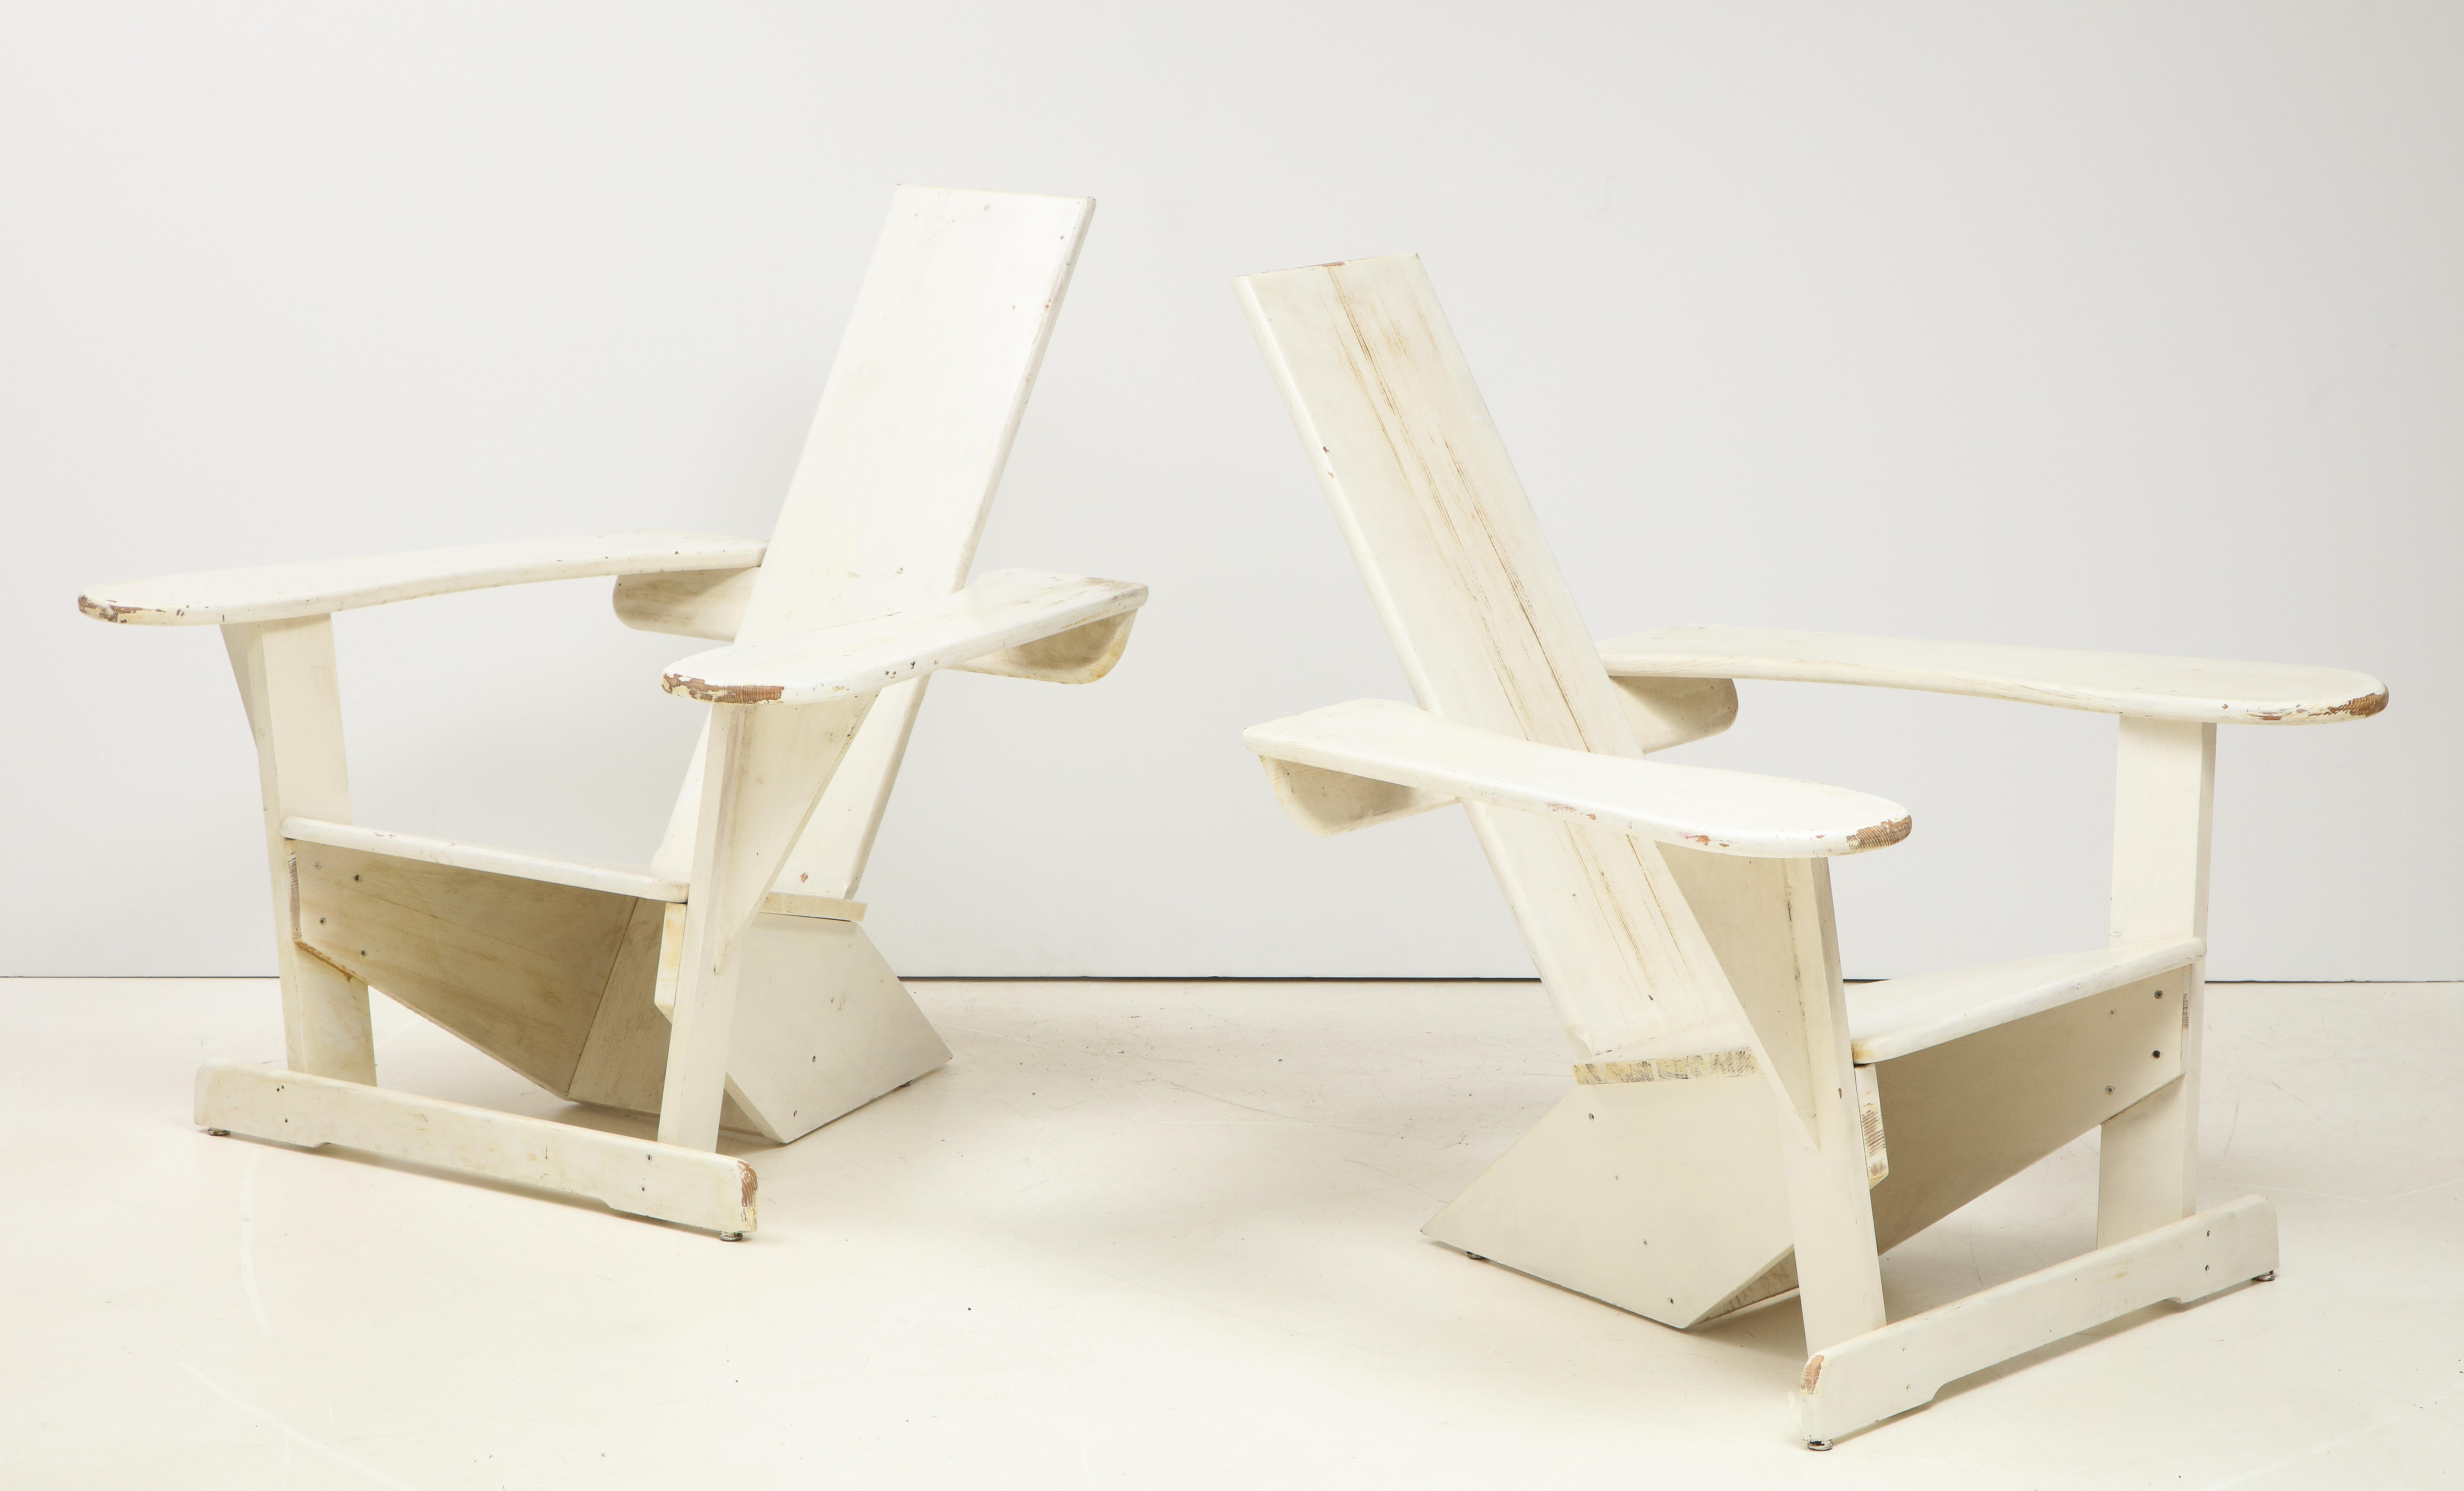 Art Deco Pair of Chairs after Pierre Dariel, ‘Biarrtiz’ model, France, c. 1926